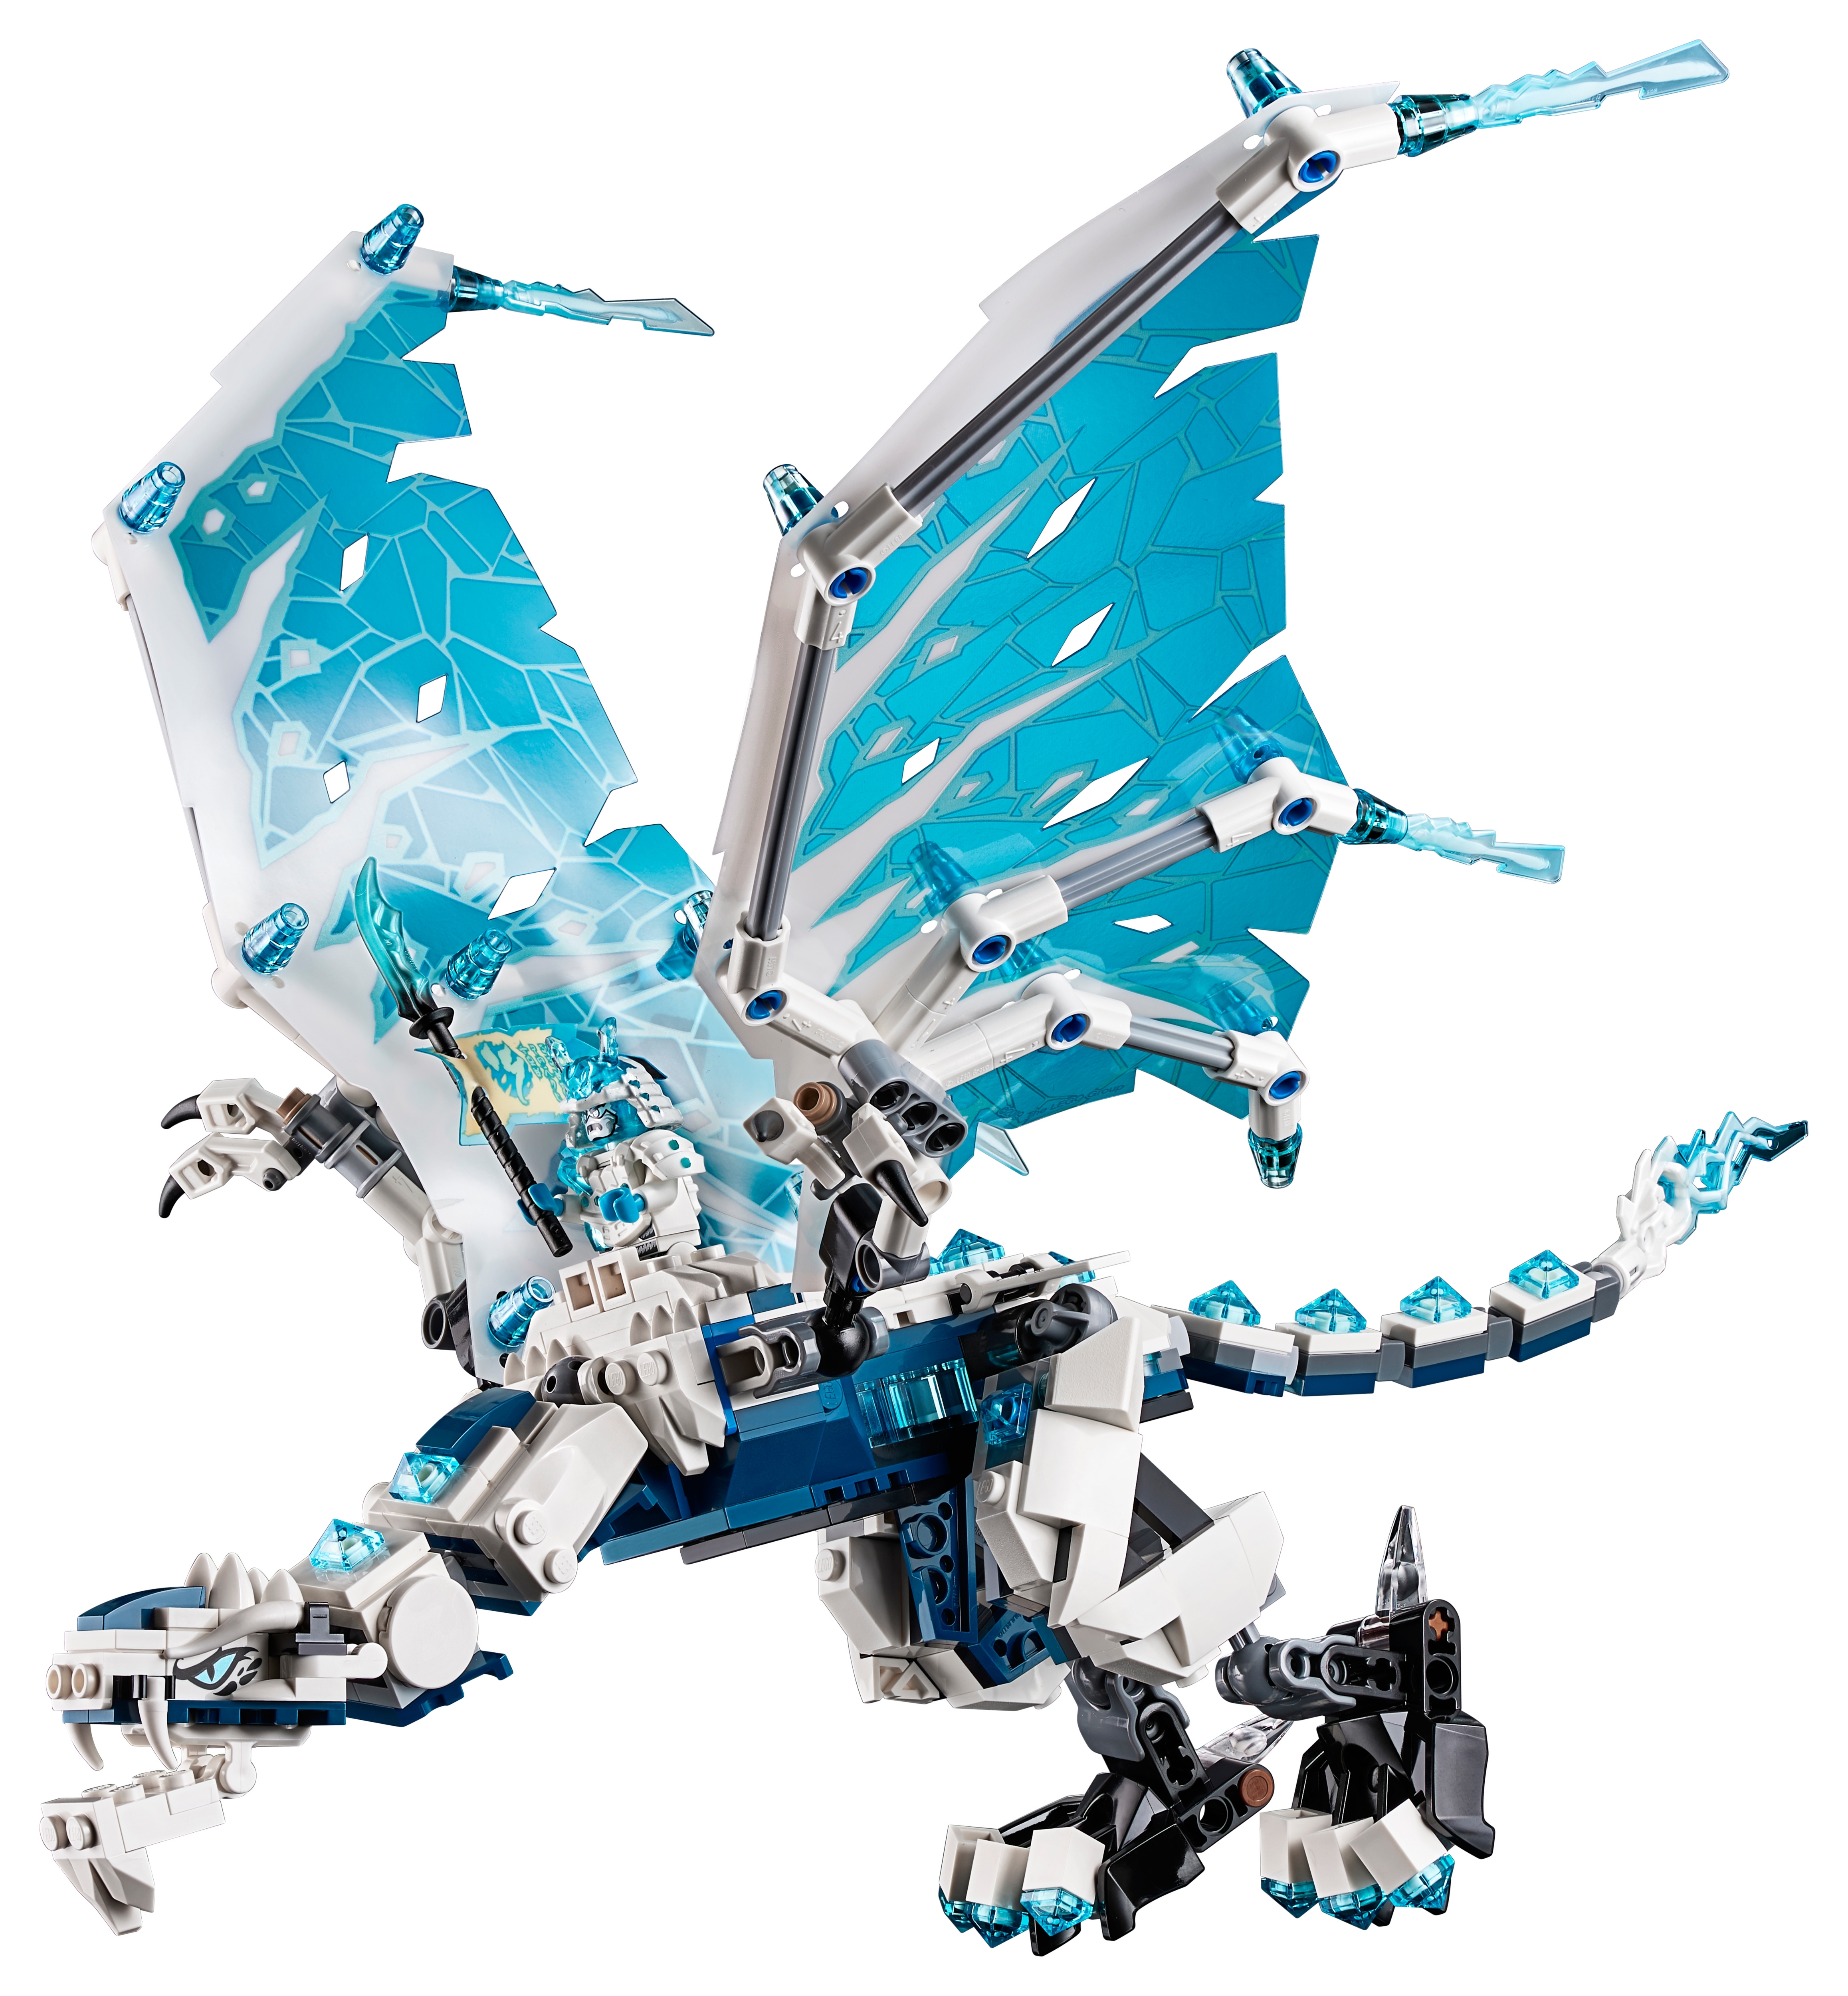 ninjago lego white dragon